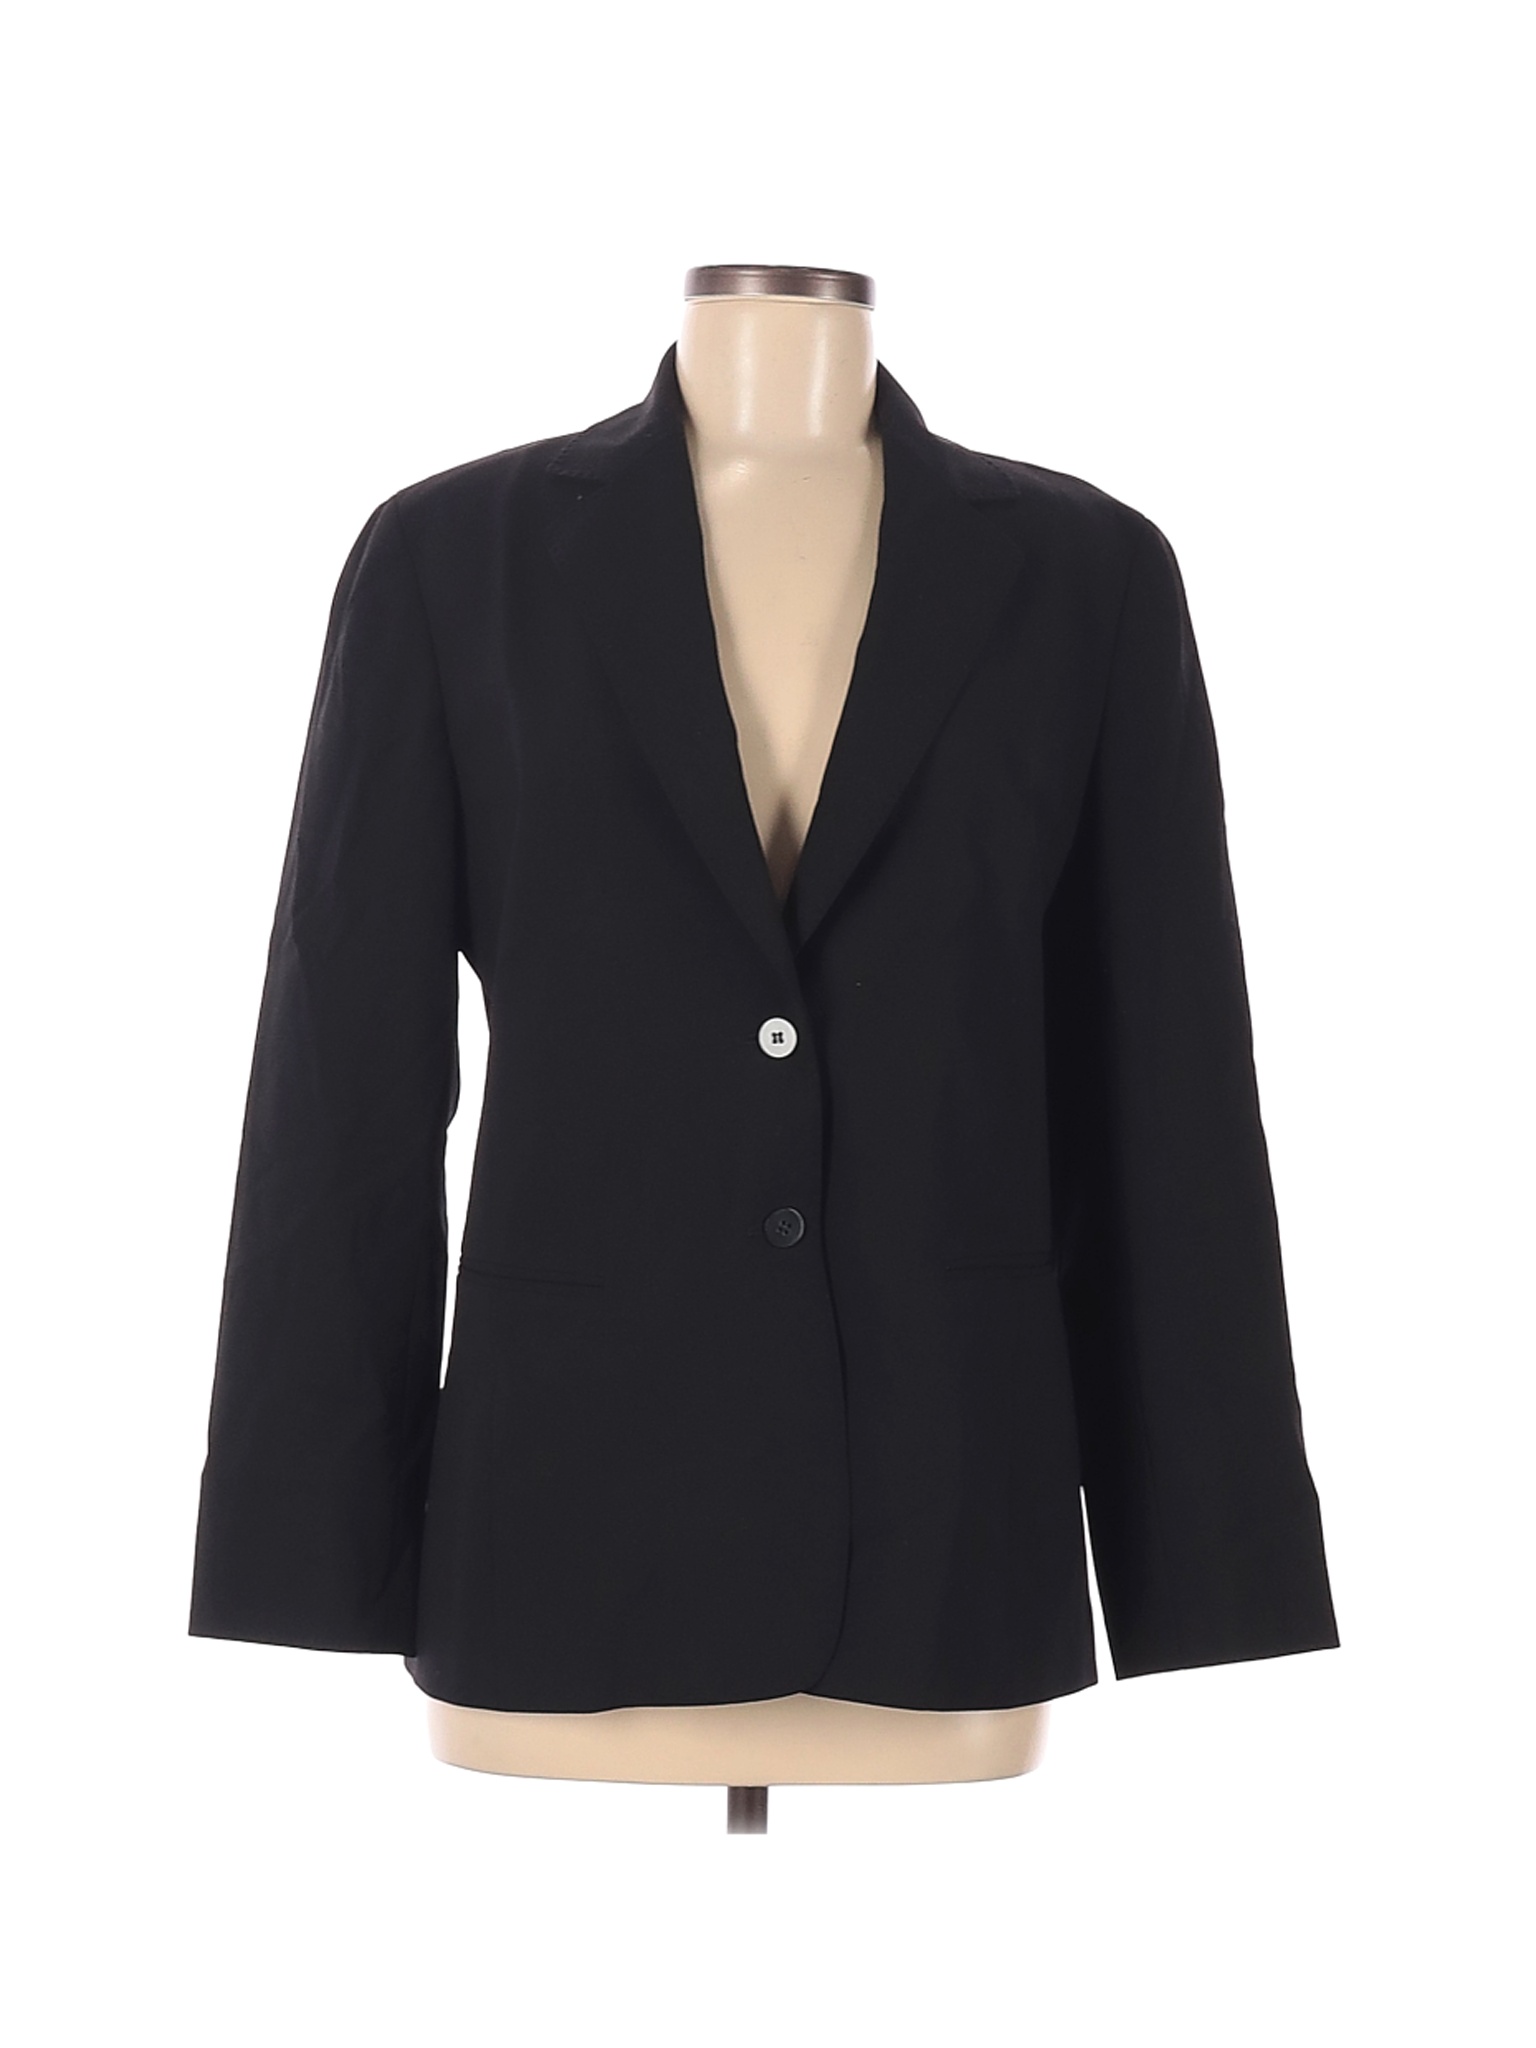 Lafayette 148 New York Women Black Wool Blazer 8 | eBay